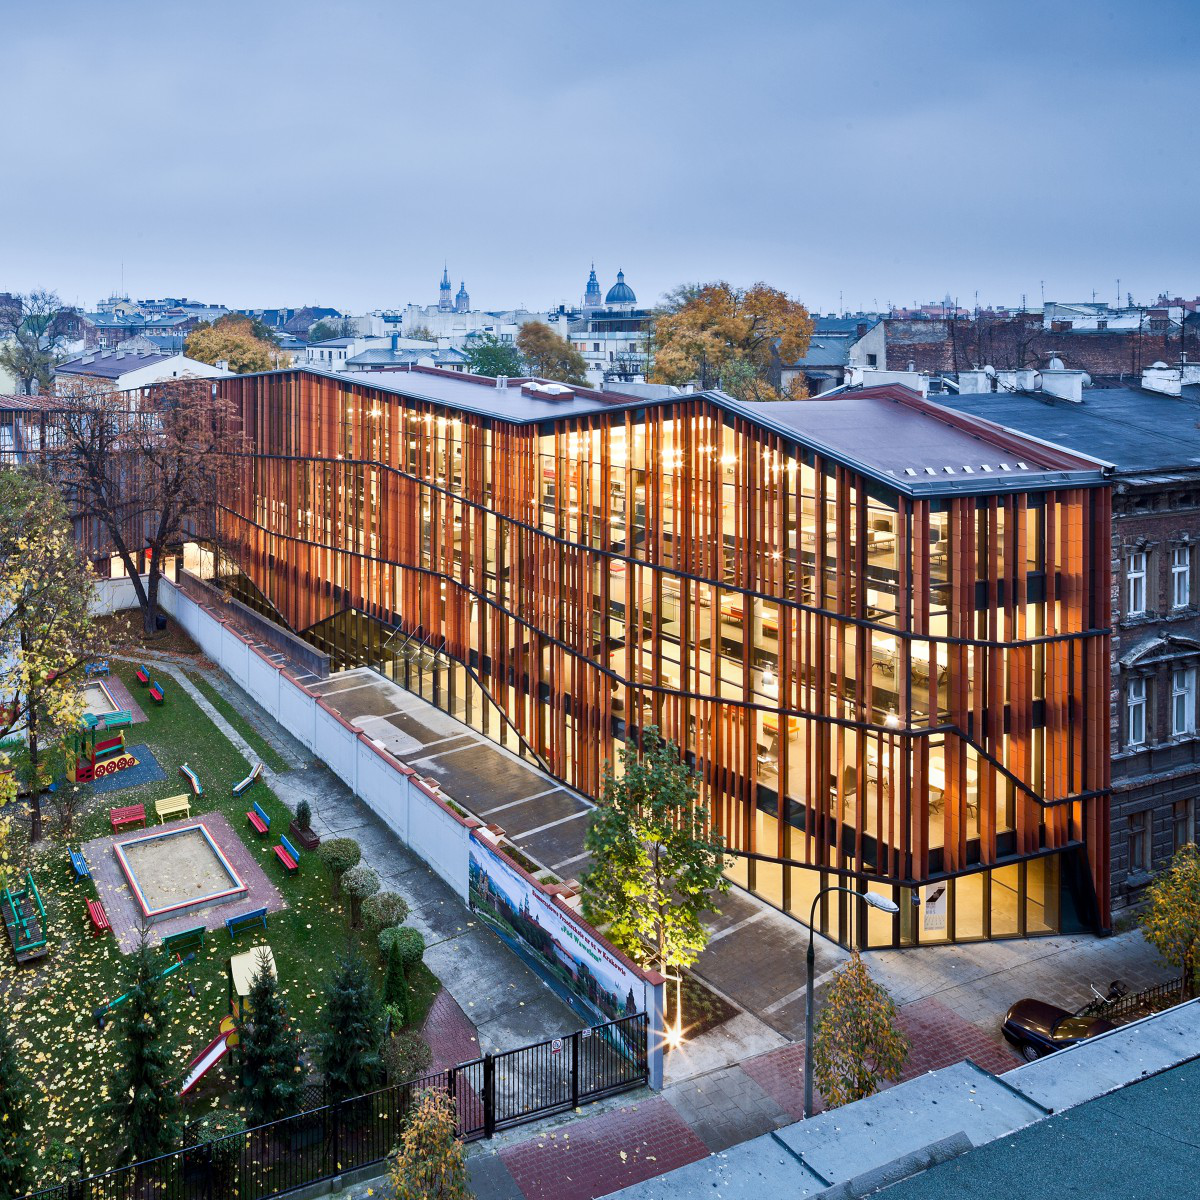 Malopolska Garden of Arts Performing arts centre & mediatheque by Ingarden & Ewý Architects